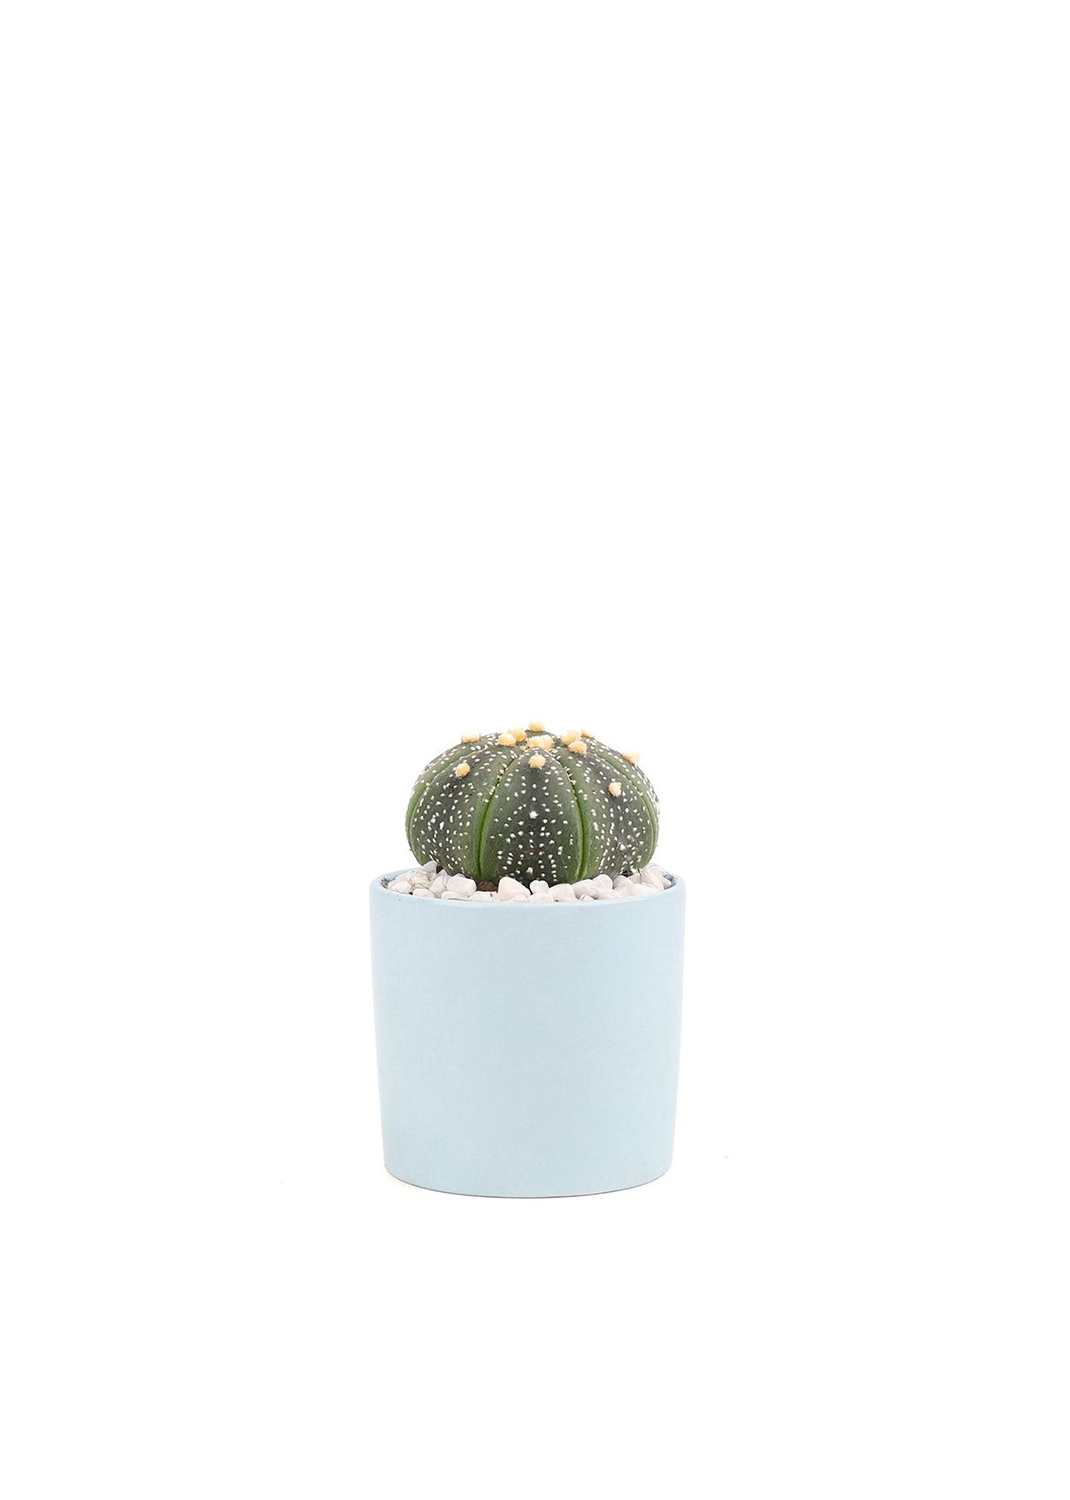 Boll Cactus with Ceramic pot white pebble 